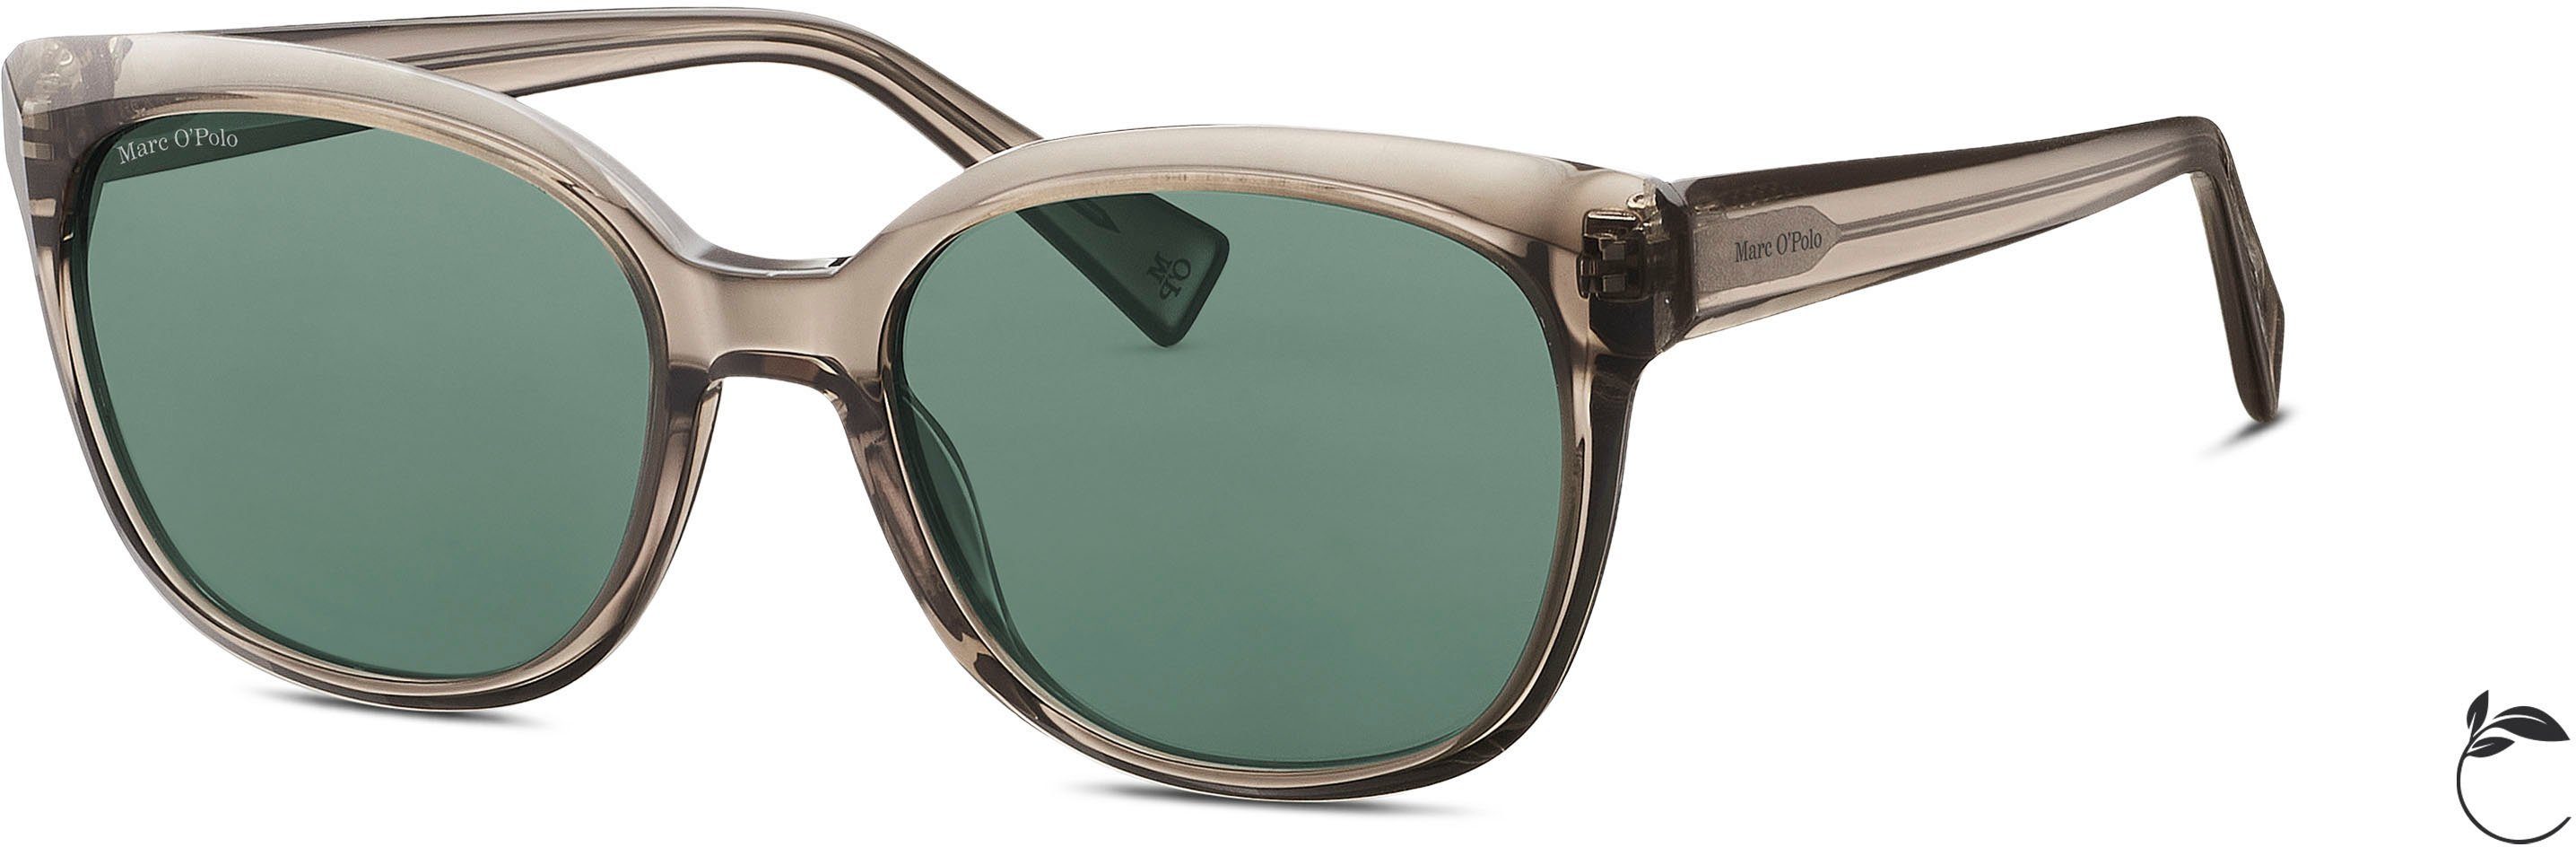 O\'Polo Sonnenbrille 506196 Karree-Form Marc Modell